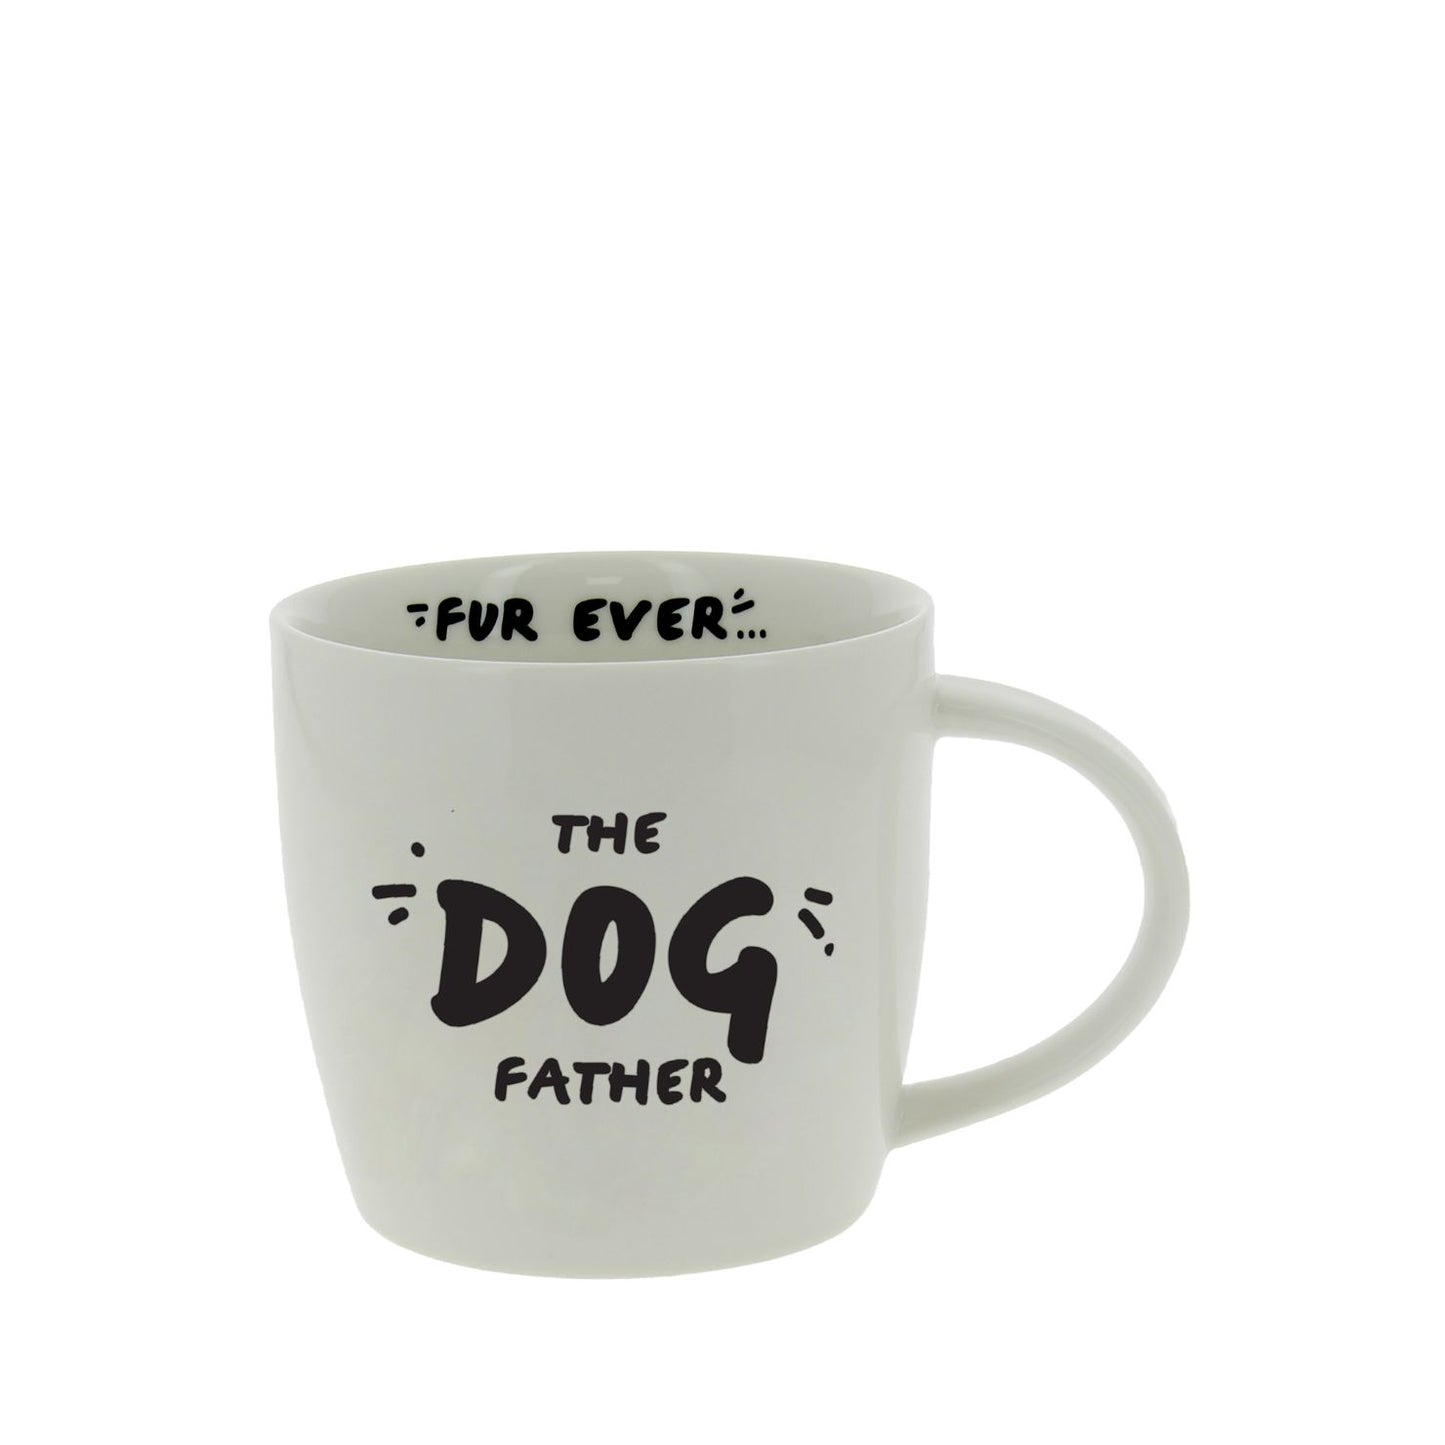 the dog father mug dog dad gift xl stoneware mug dishwasher safe Best In Show